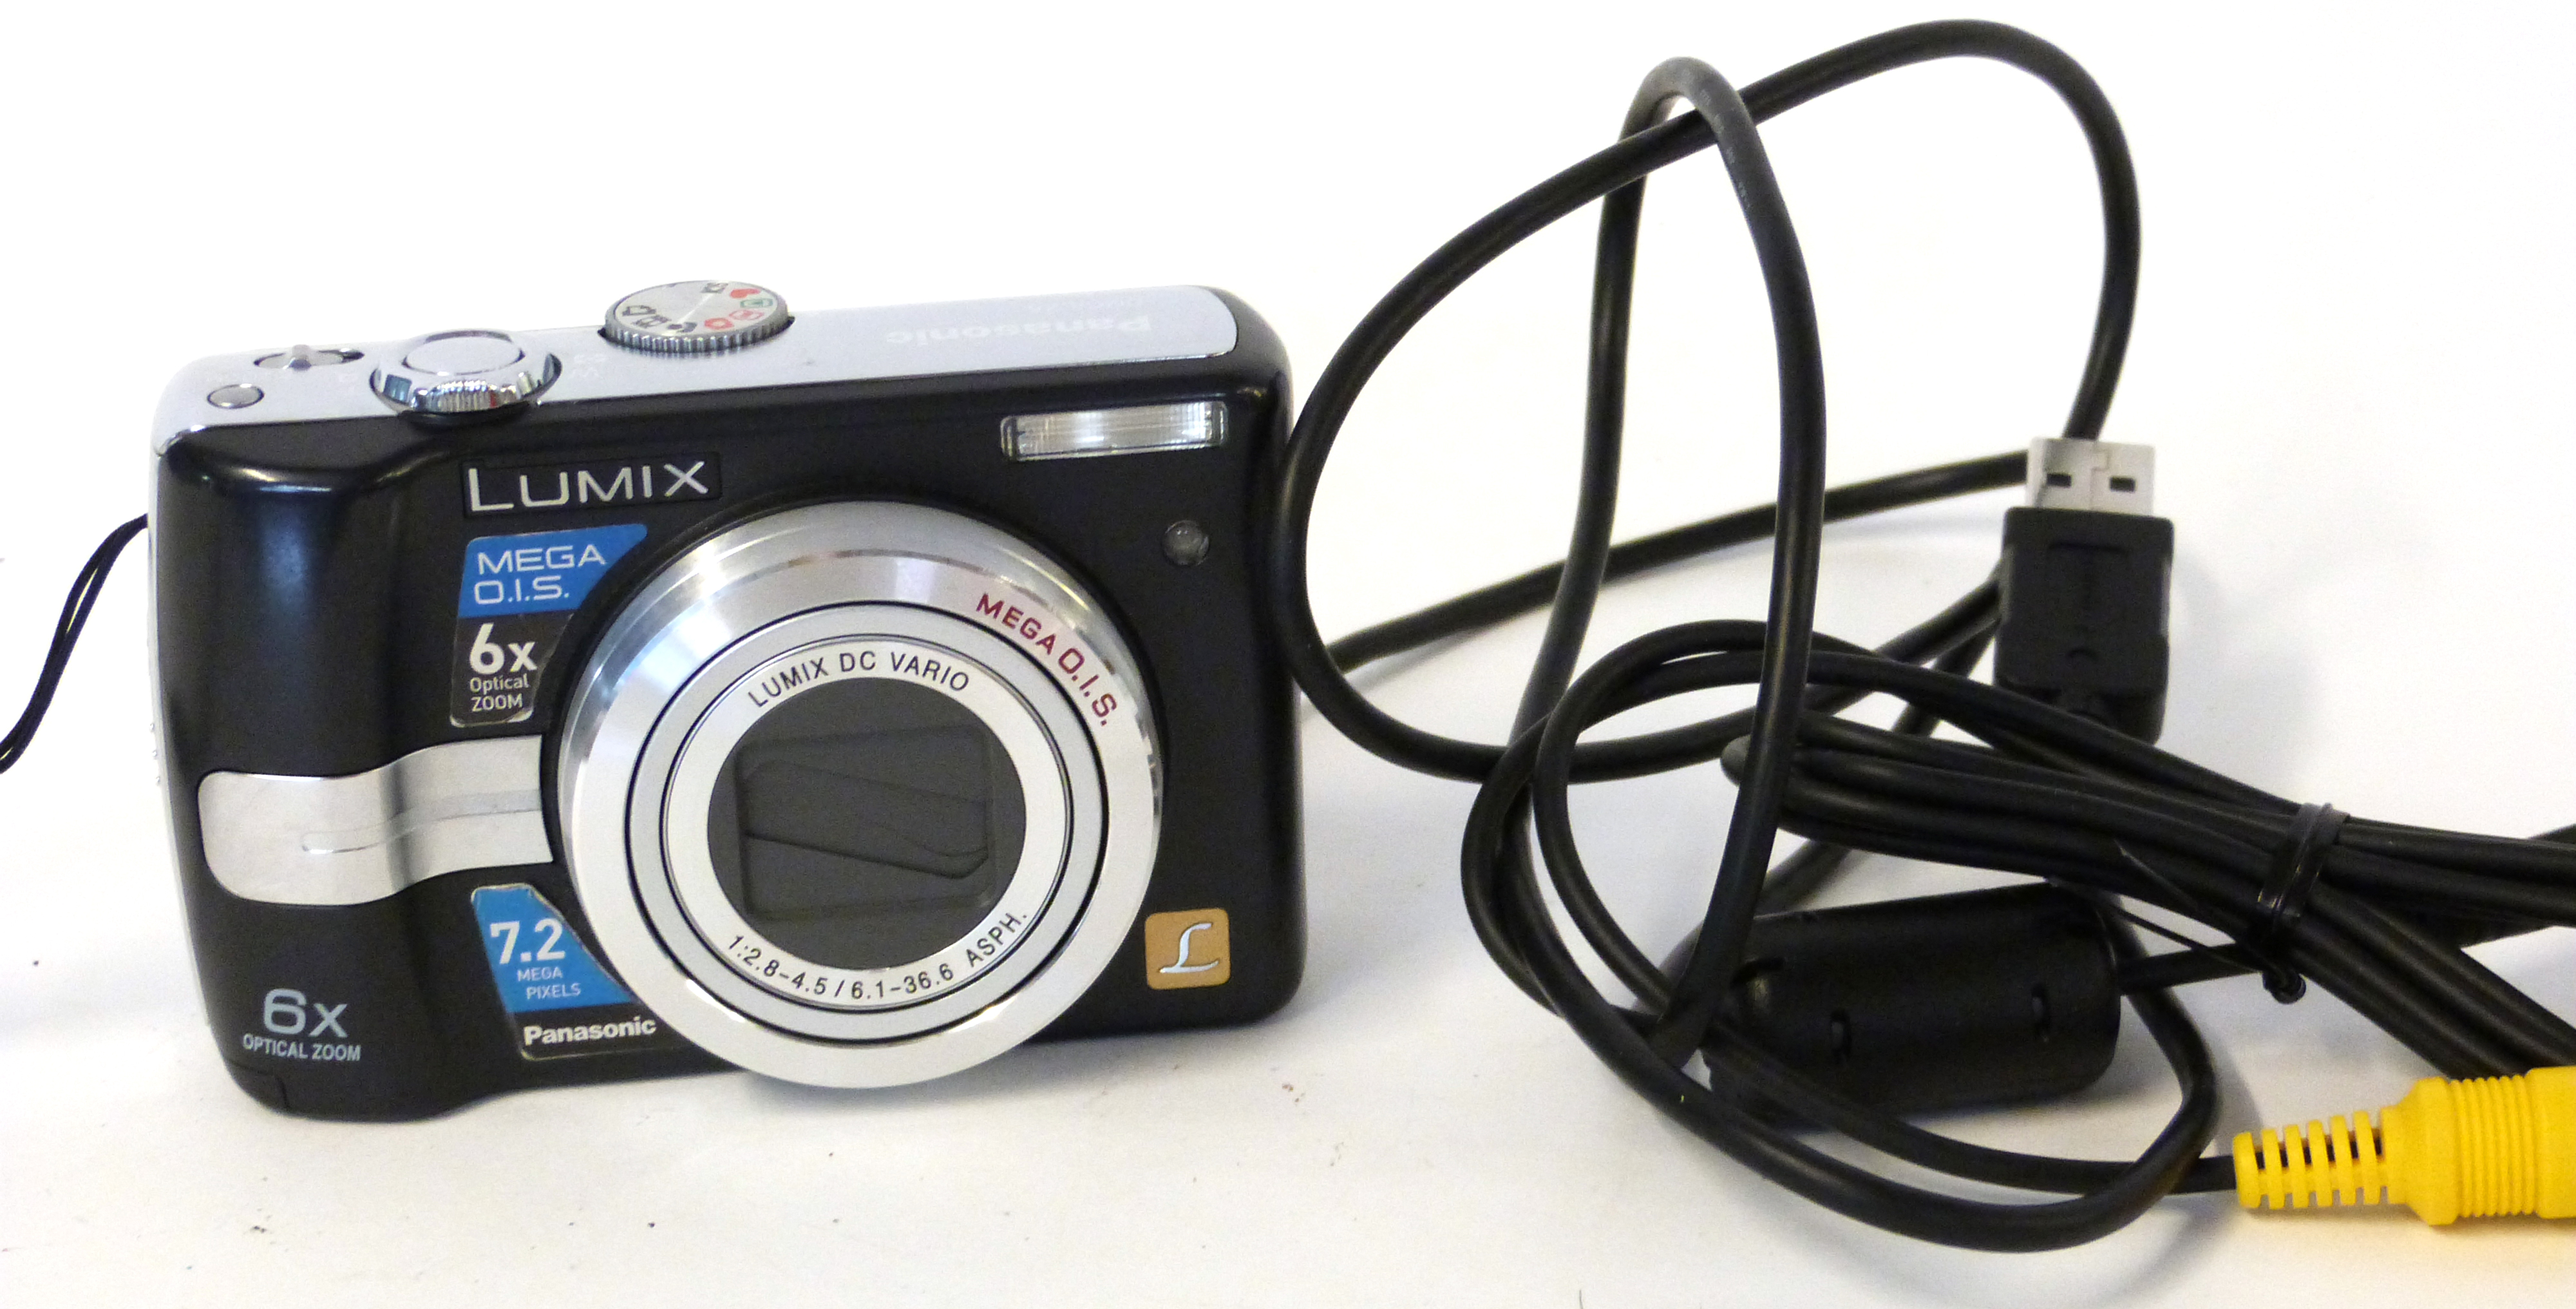 Lumix DMC-LZ6 digital camera plus leads